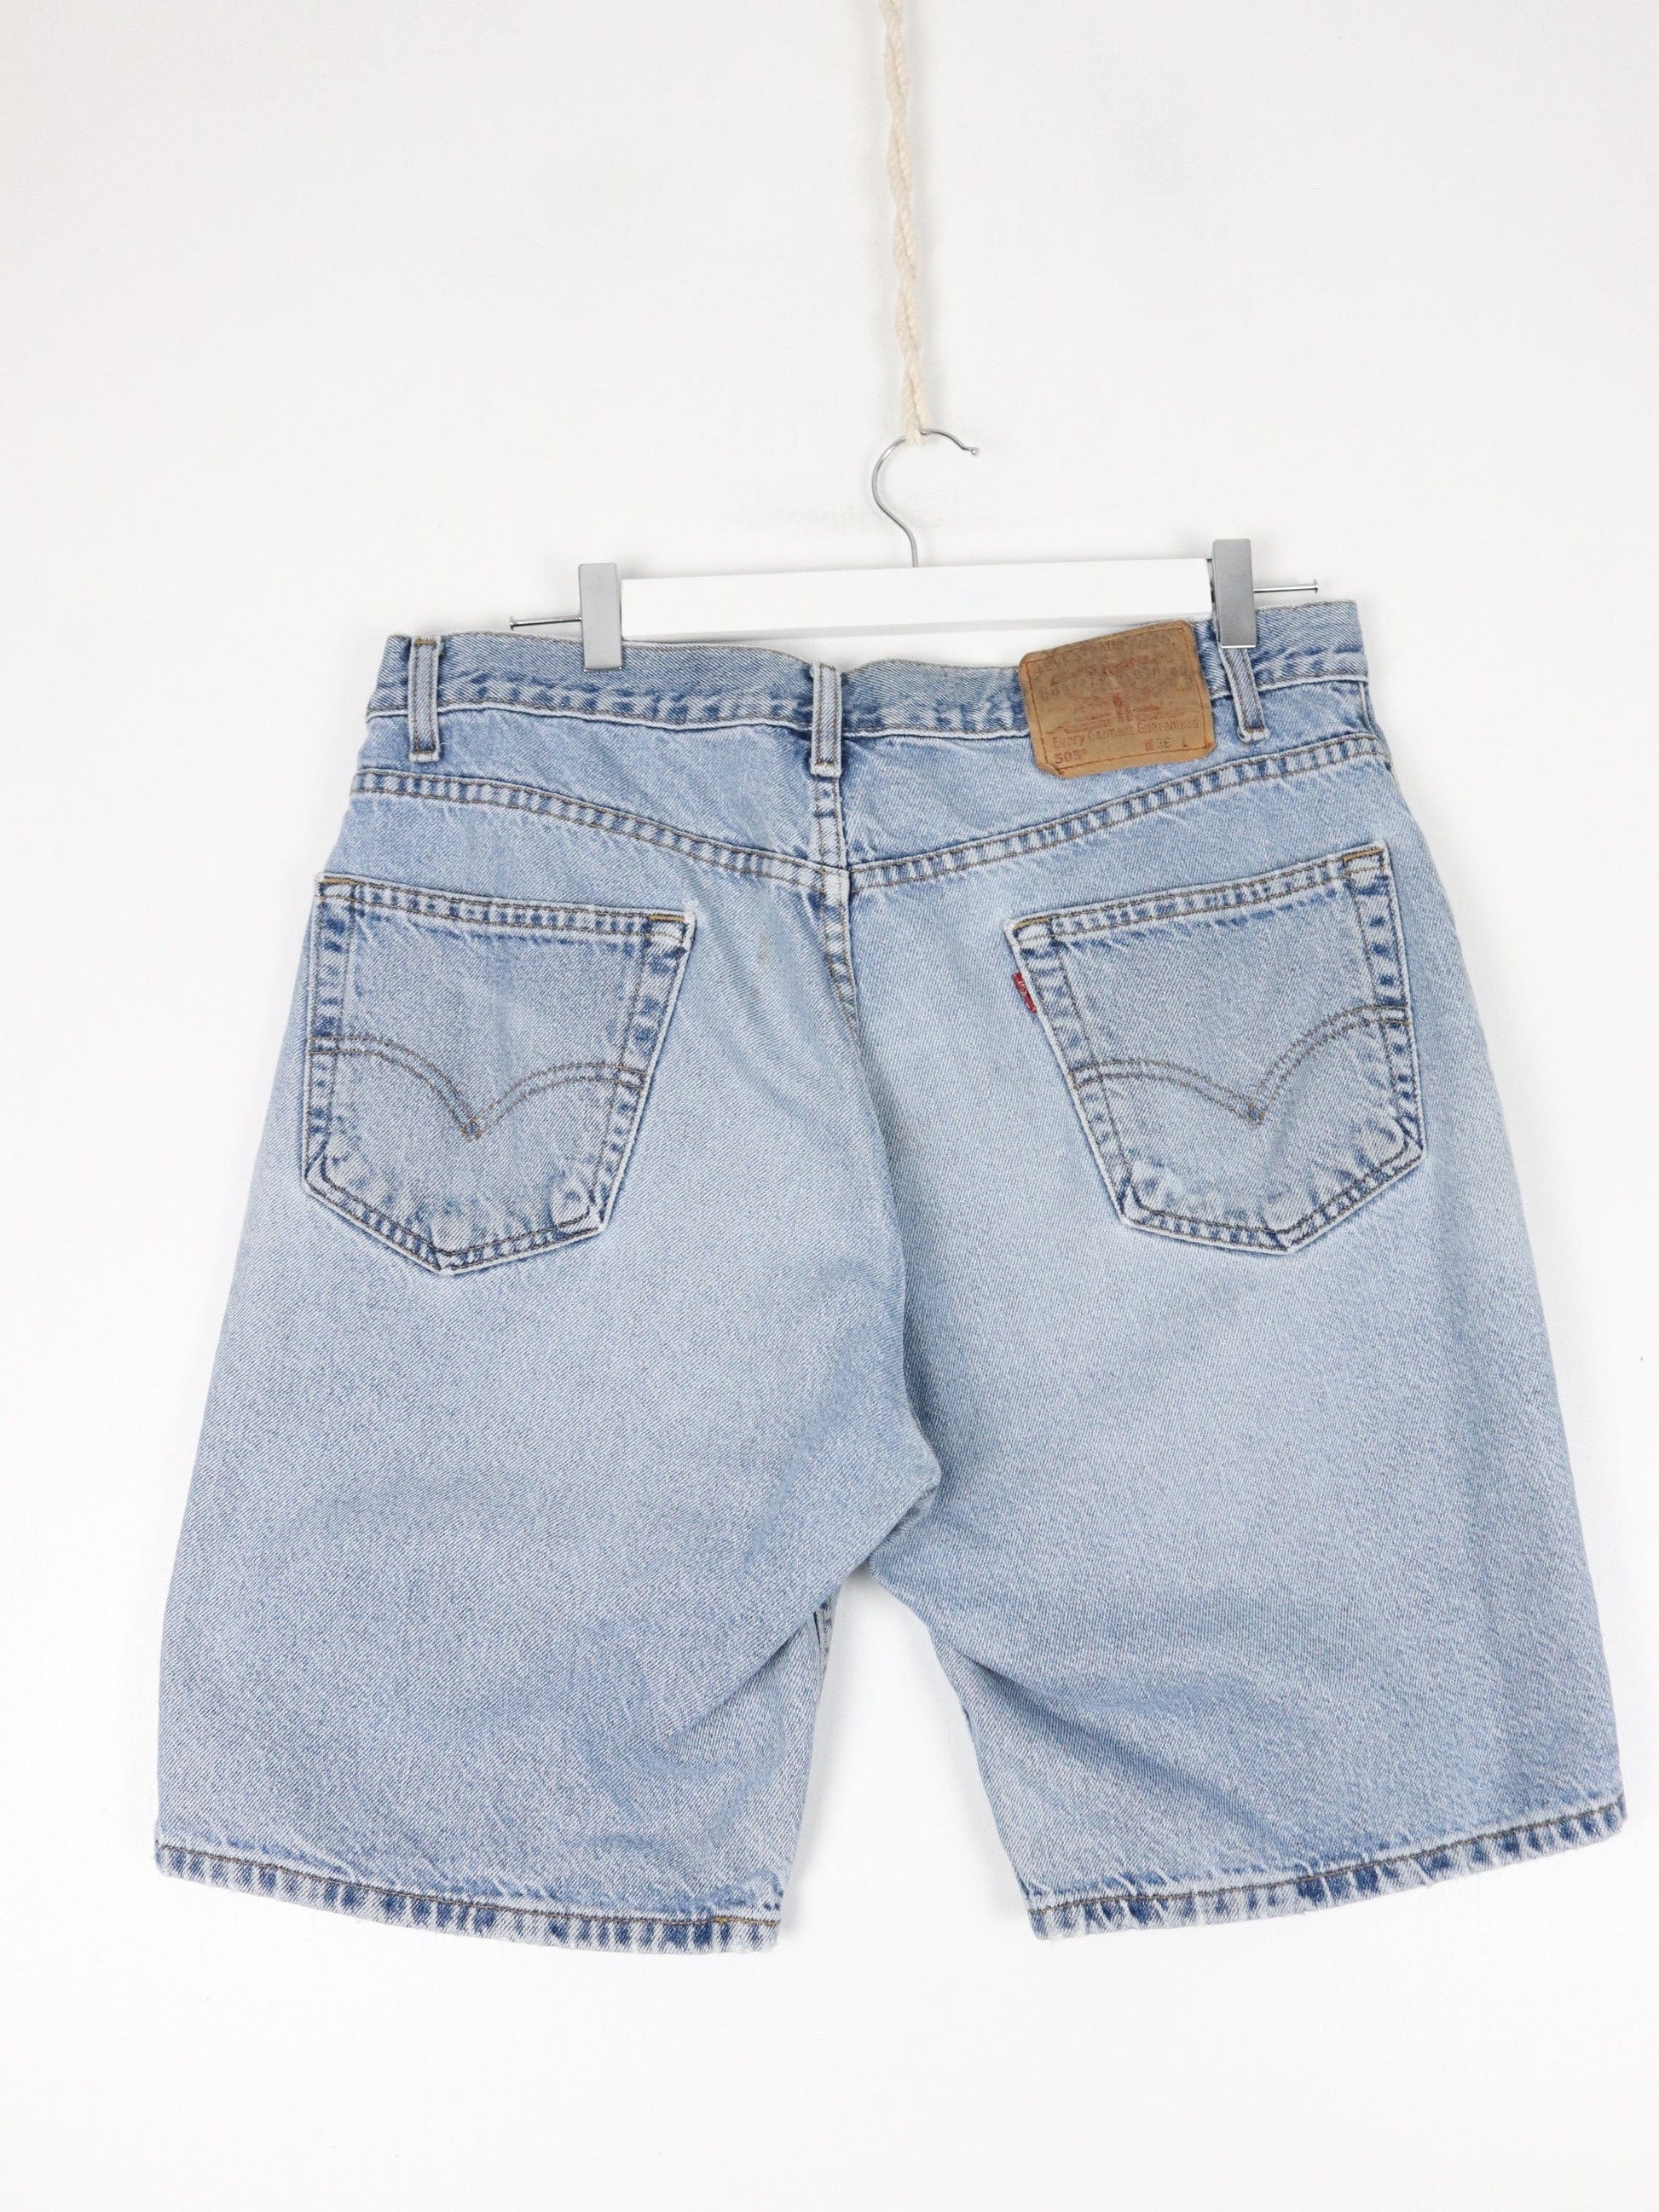 Levi's Shorts Vintage Levi's Shorts Fits Mens 35 Blue Denim Jorts 505 Regular